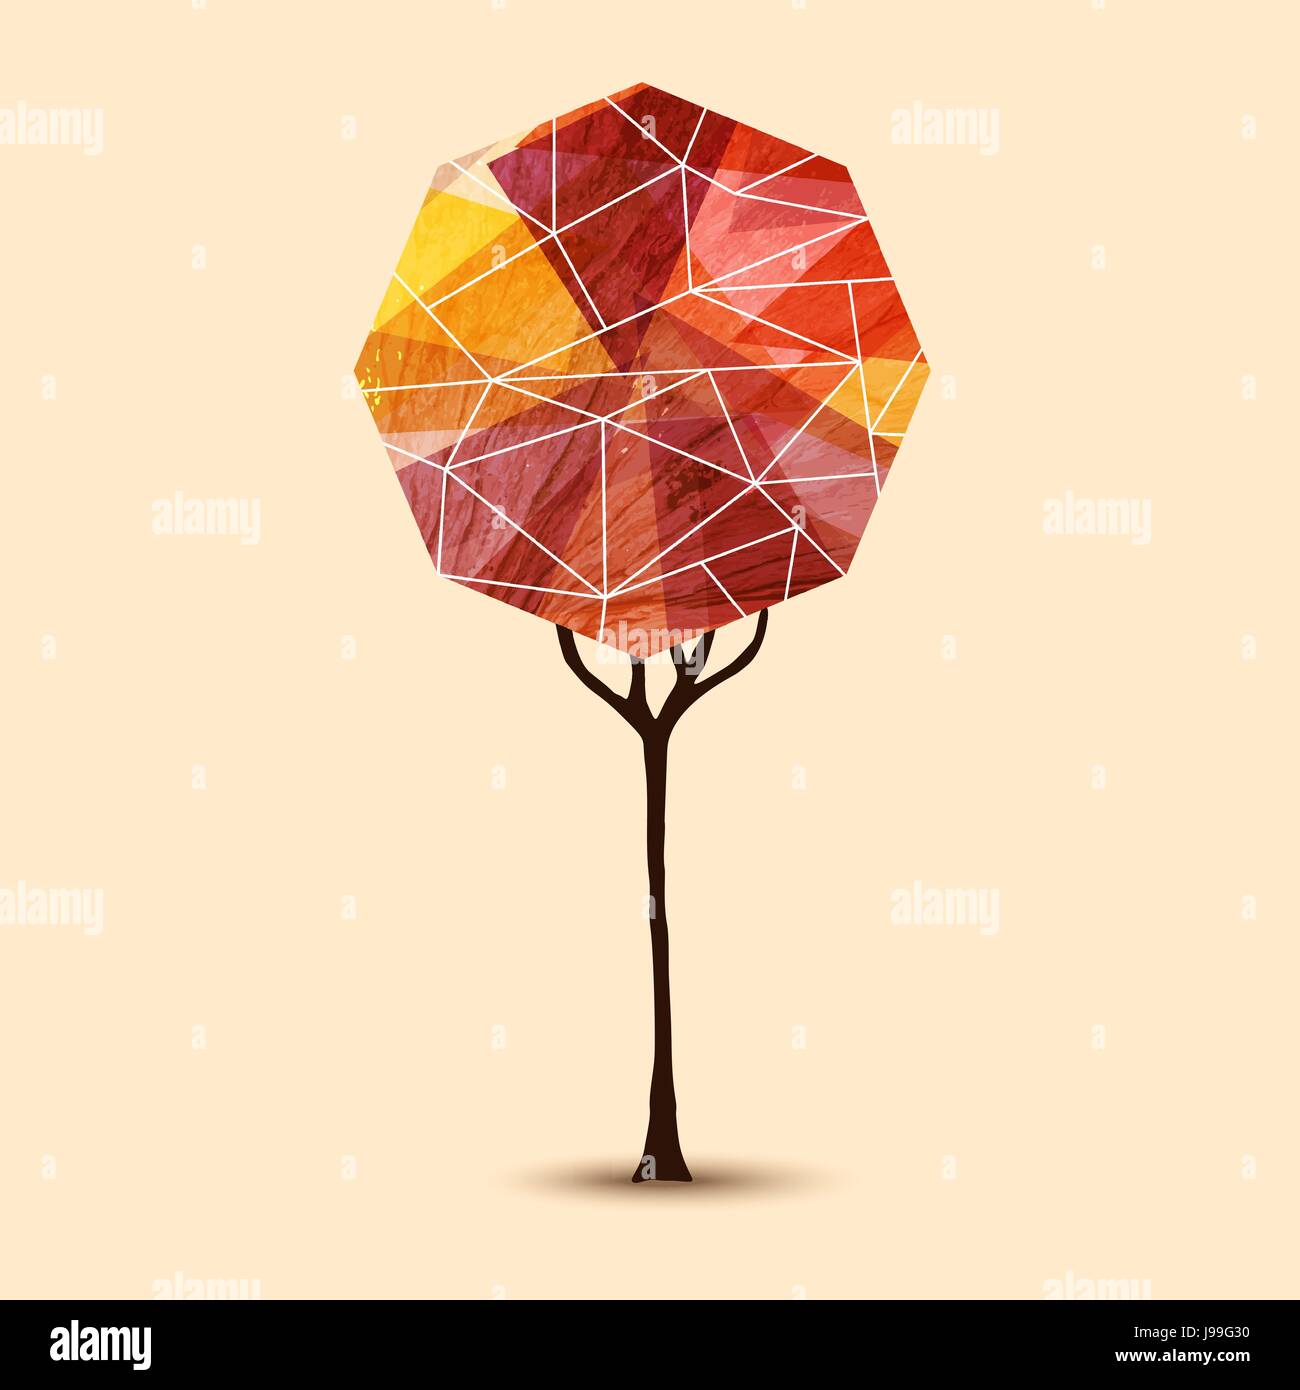 Moderne geometrische abstrakte Herbstsaison Baum Abbildung. EPS10 Vektor. Stock Vektor